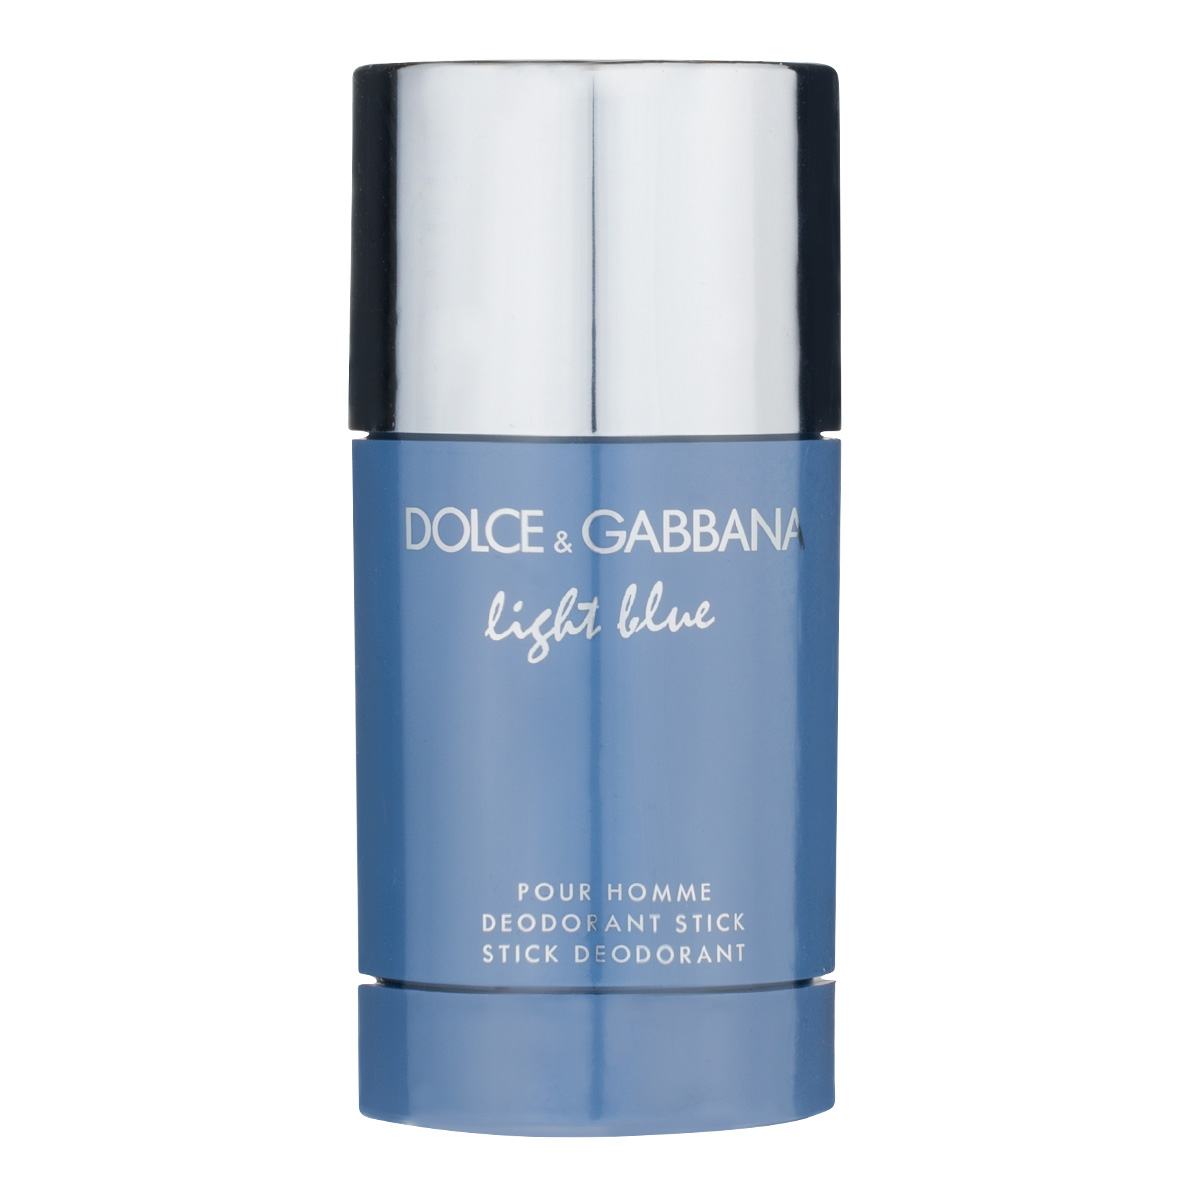 light blue deodorant spray